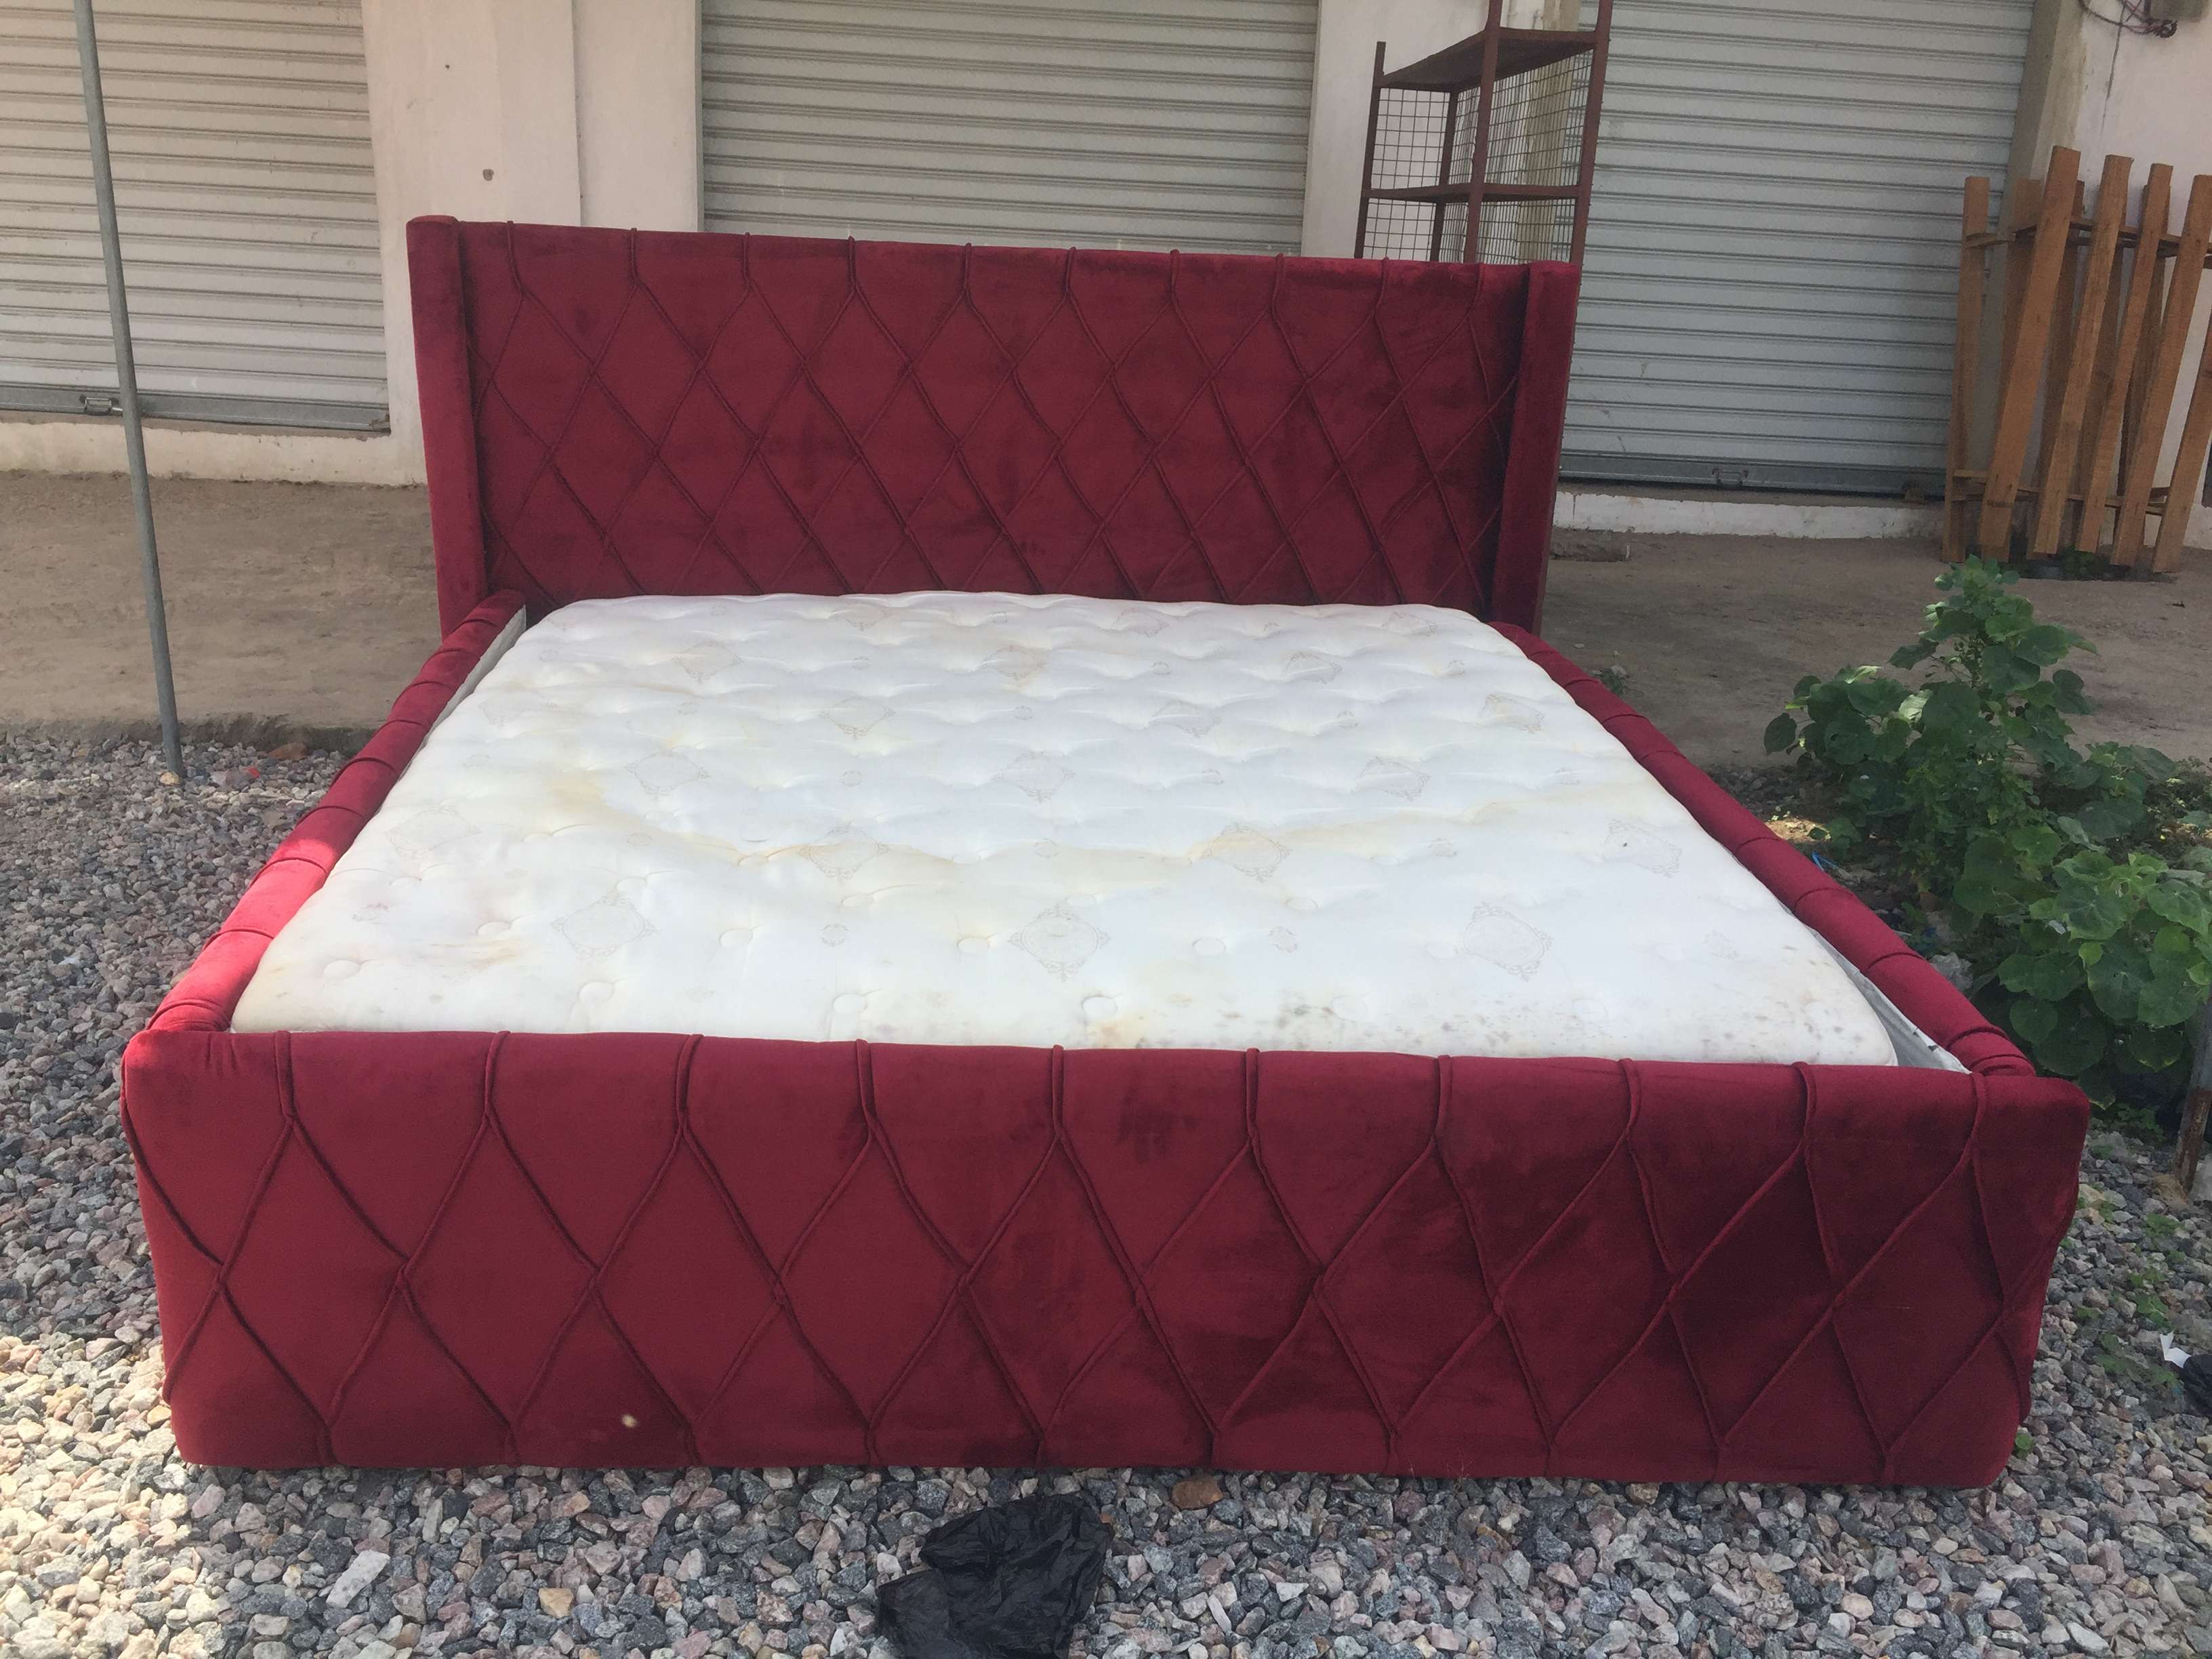 Used mattress